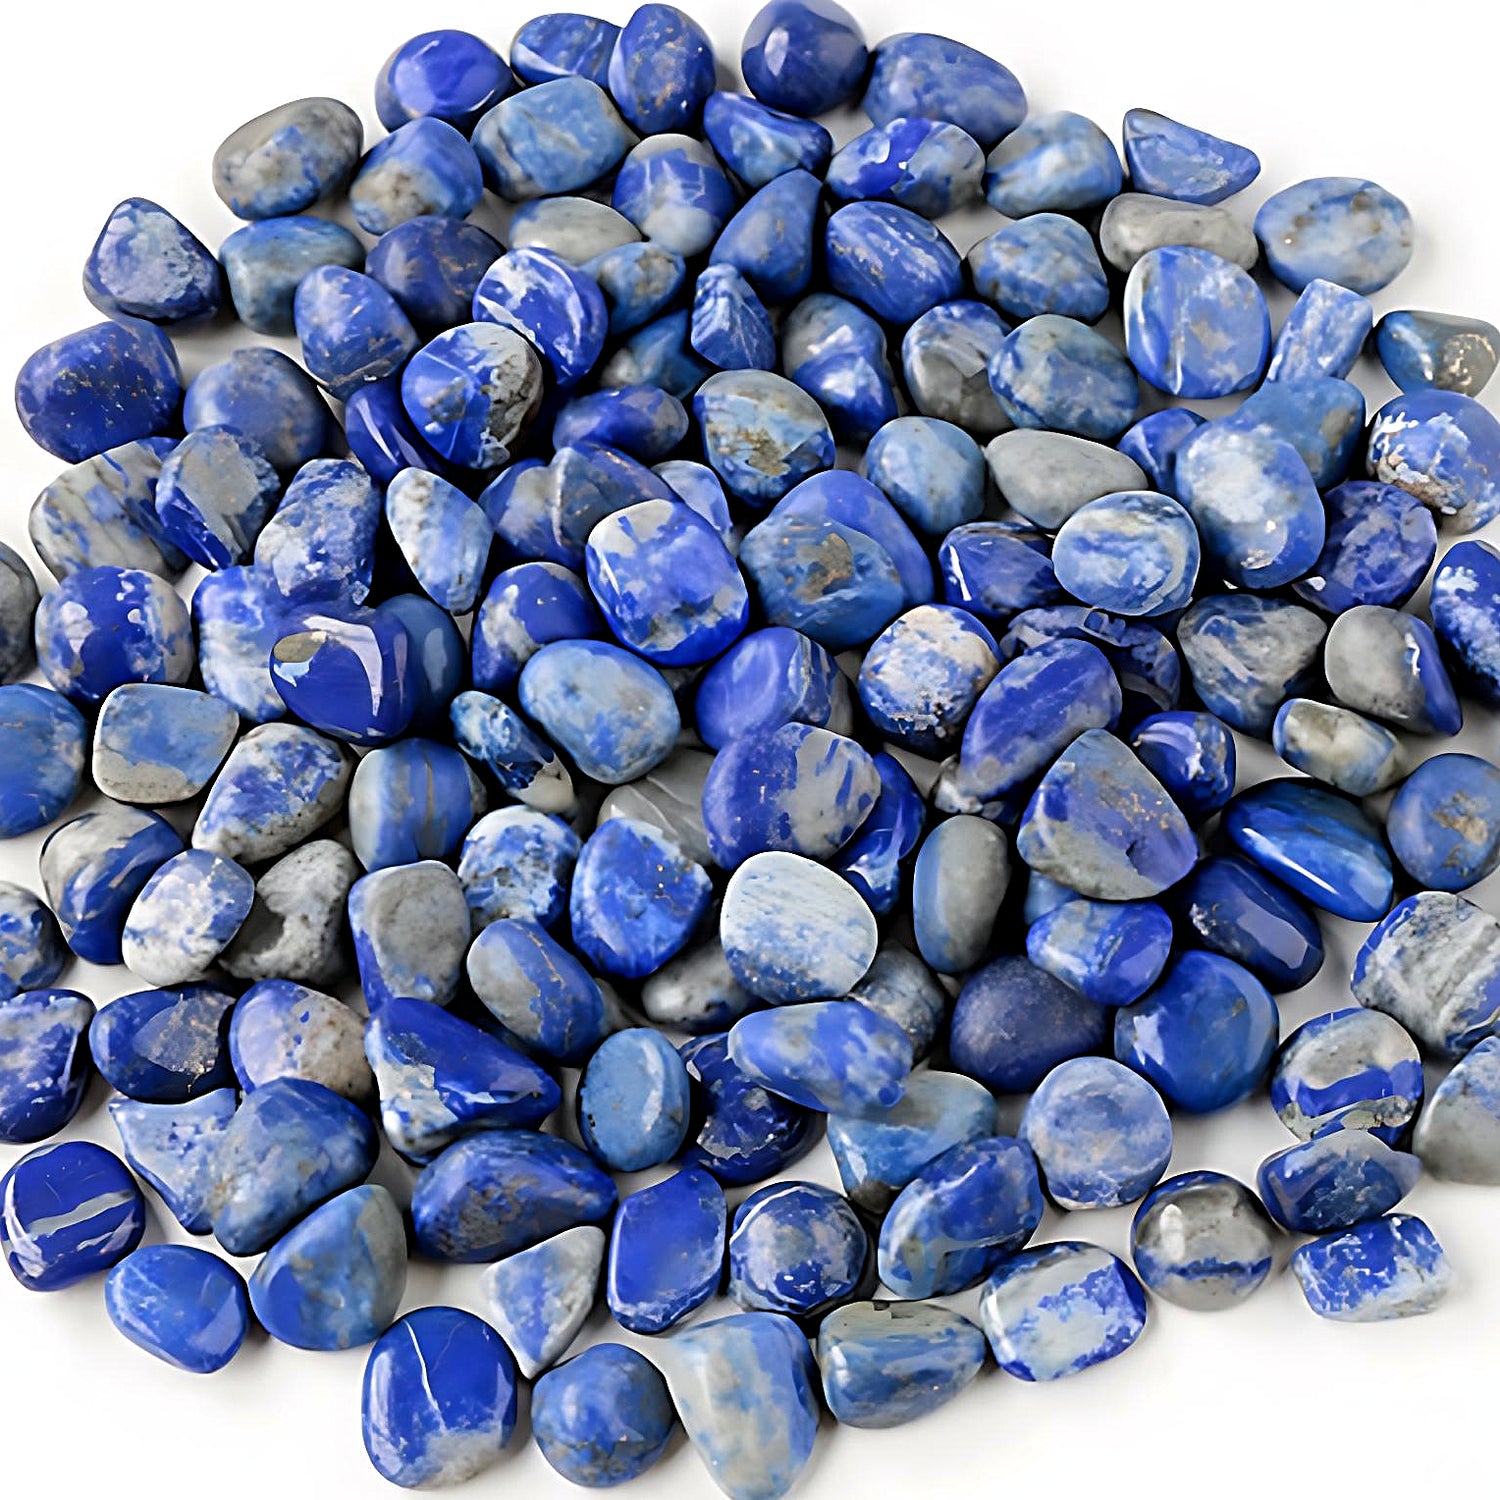 semi-precious tumbled stones in a bamboo bowl: lapis lazuli